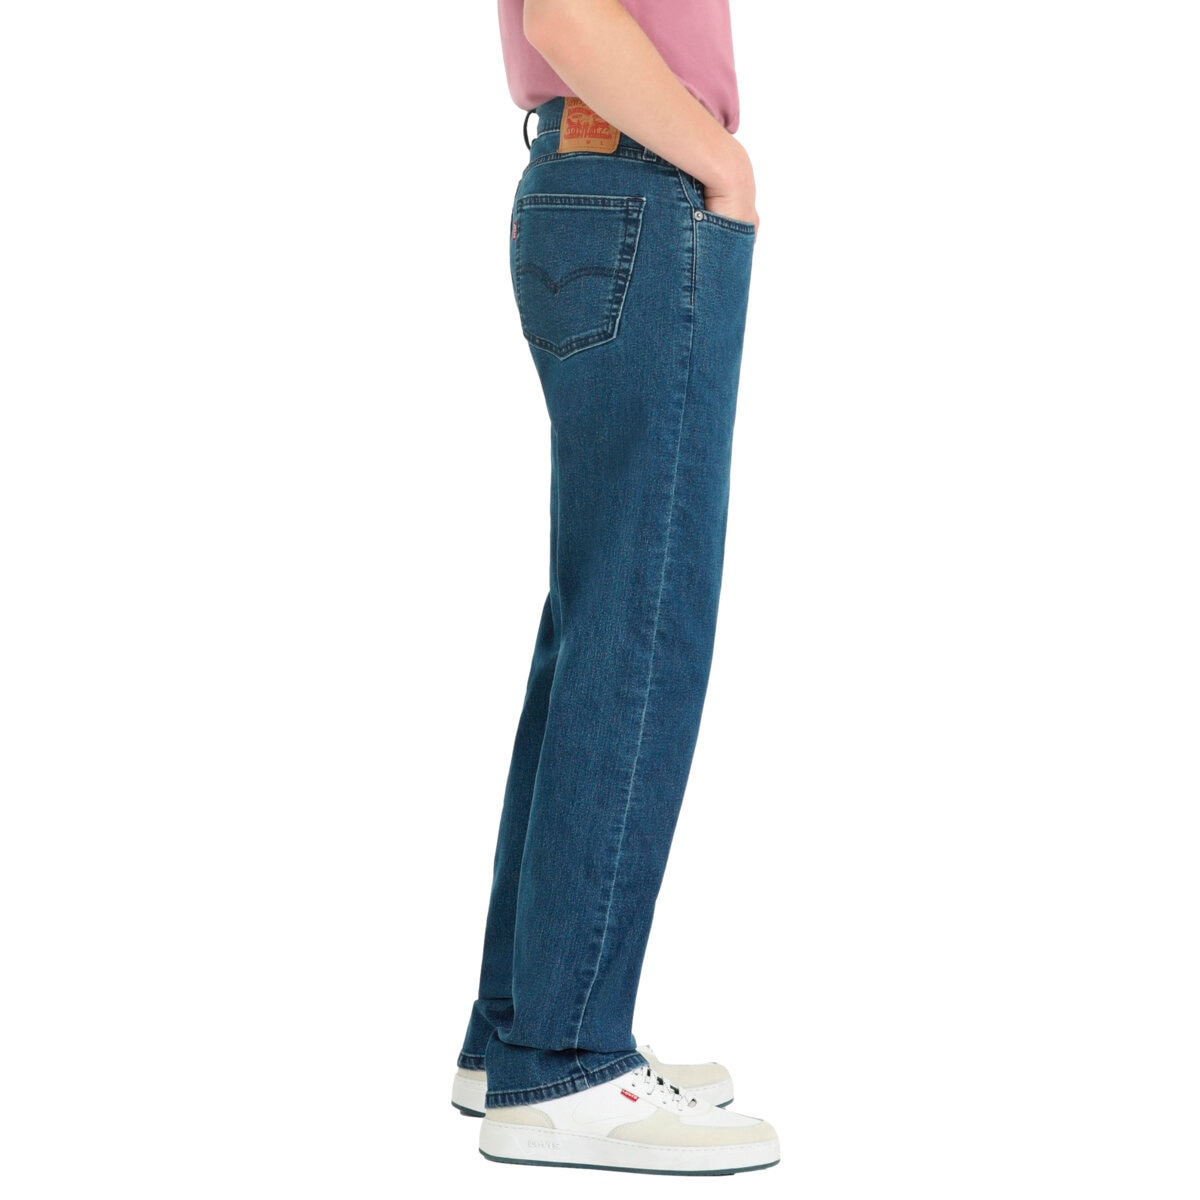 Levis 505 Jeans para Caballero Azul Medio 40x32